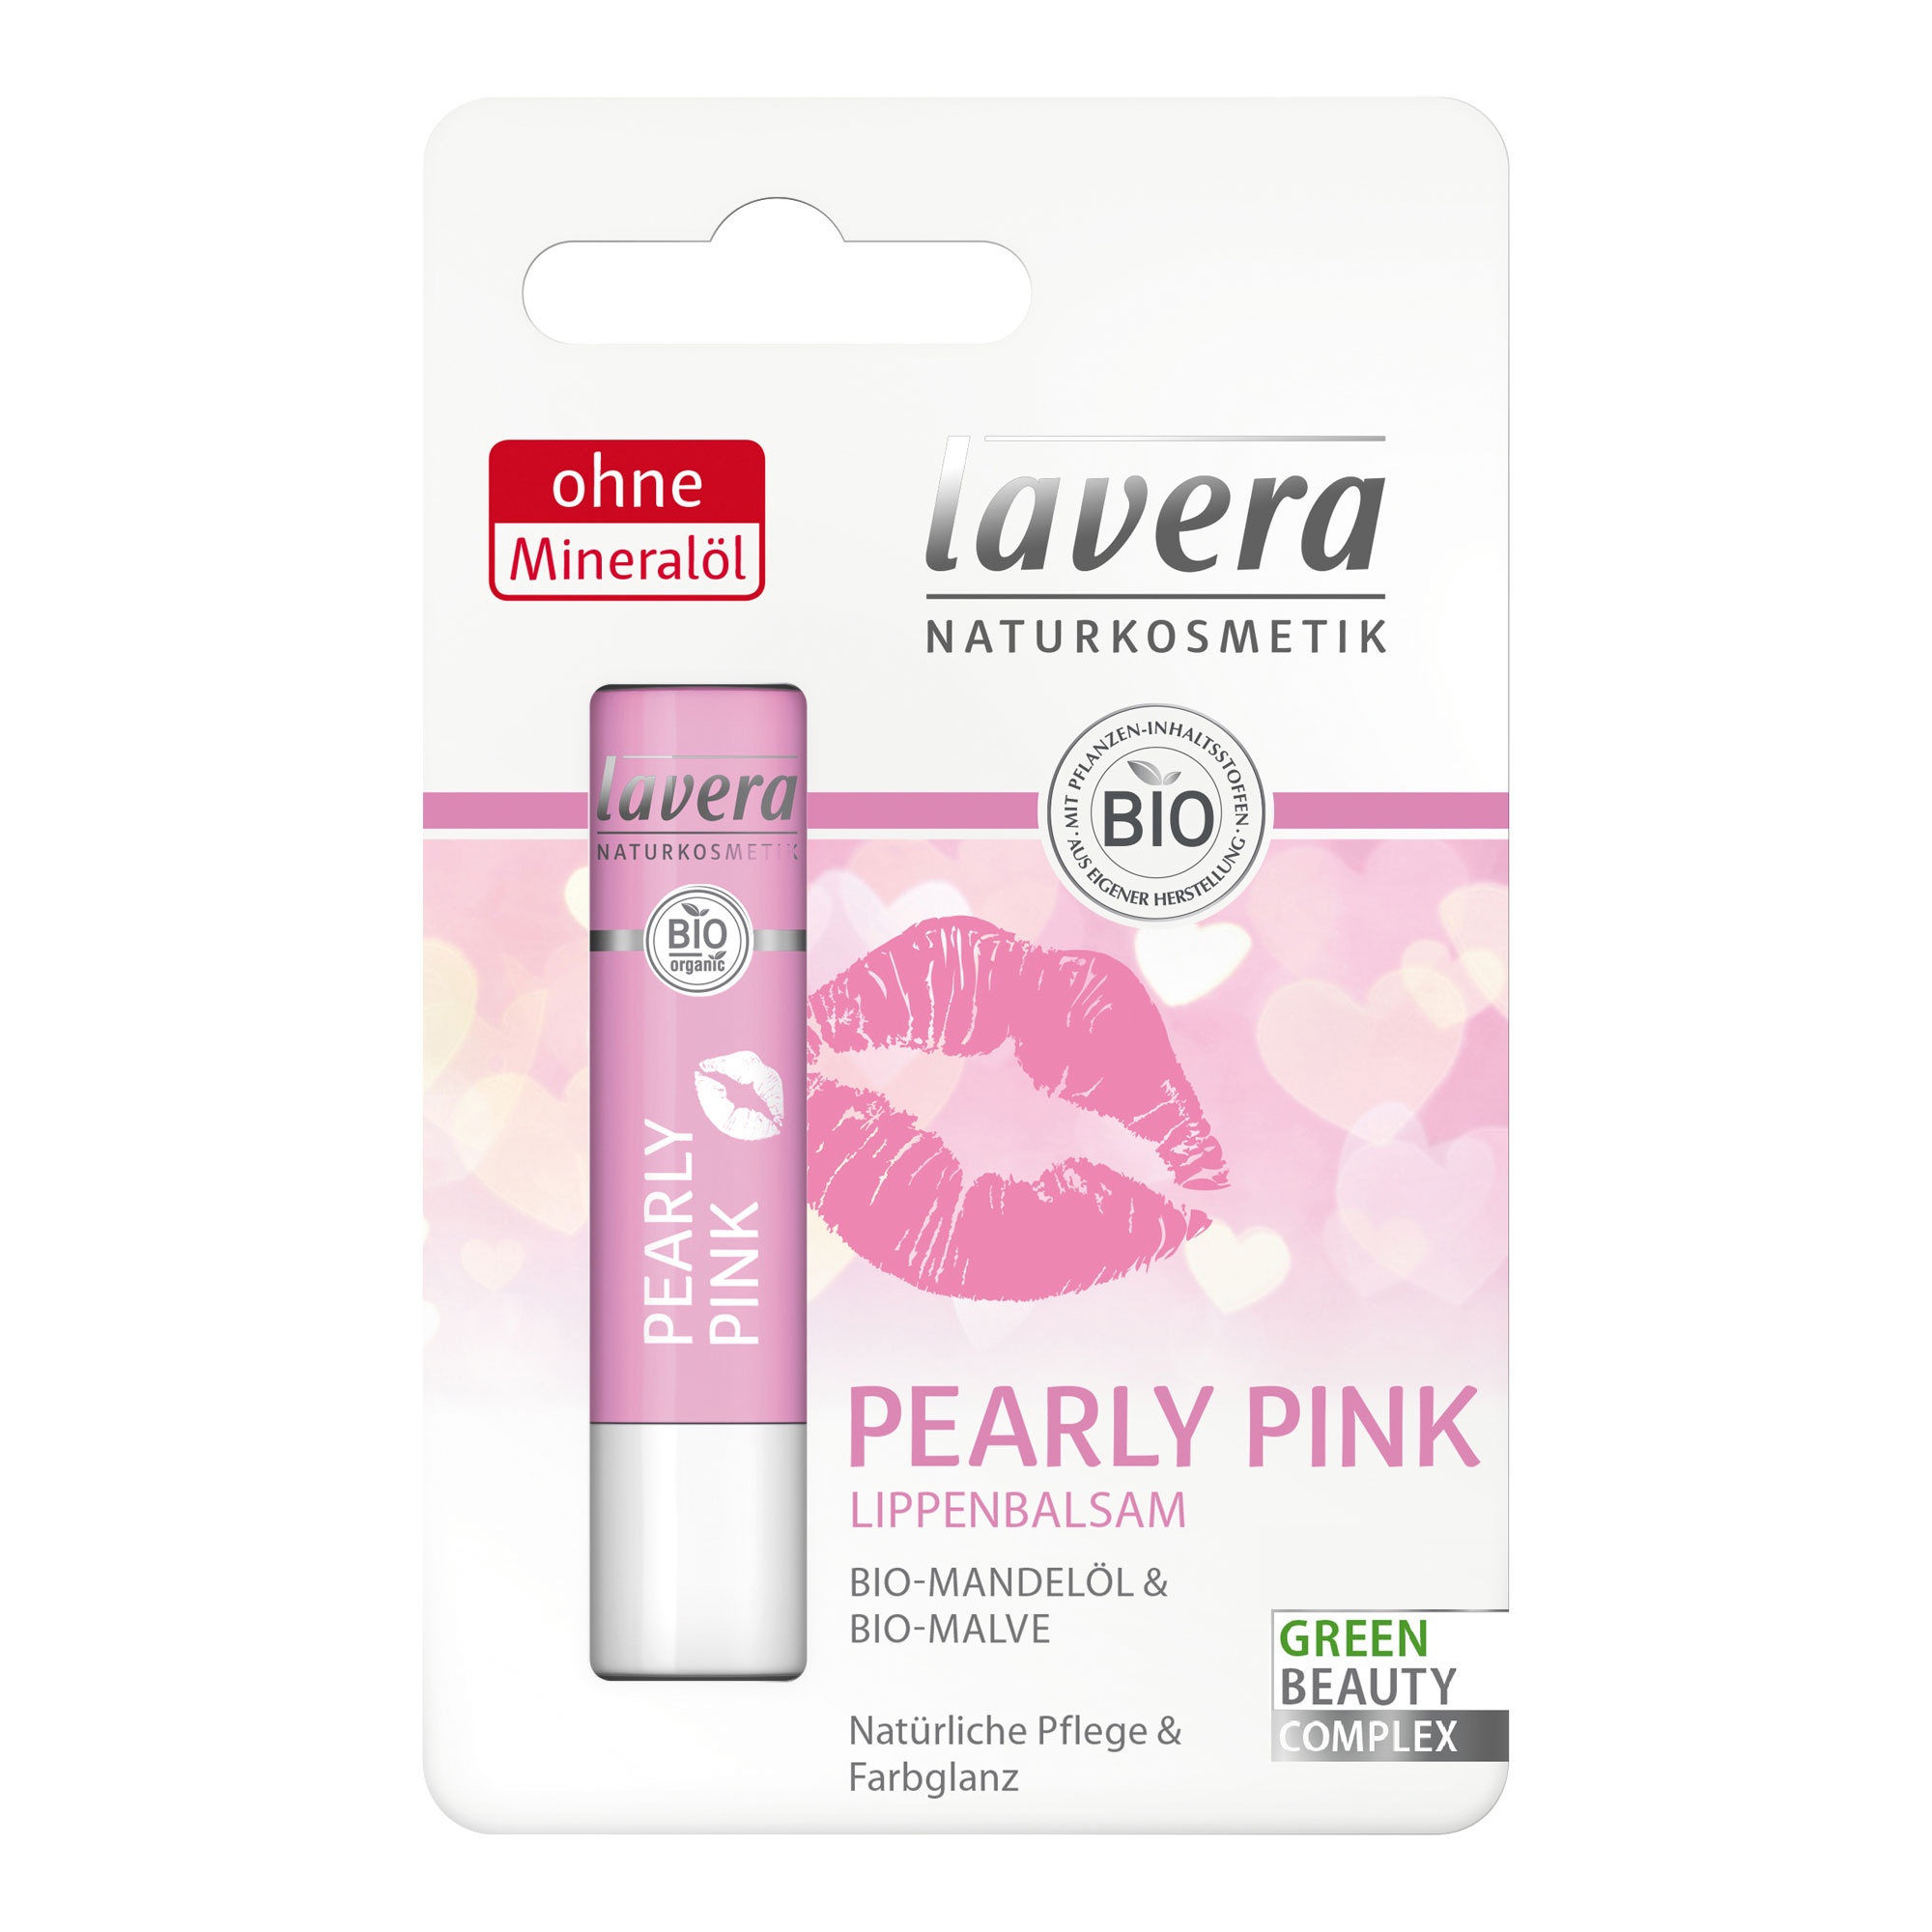 Lavera Pearly Pink Lippenbalsam